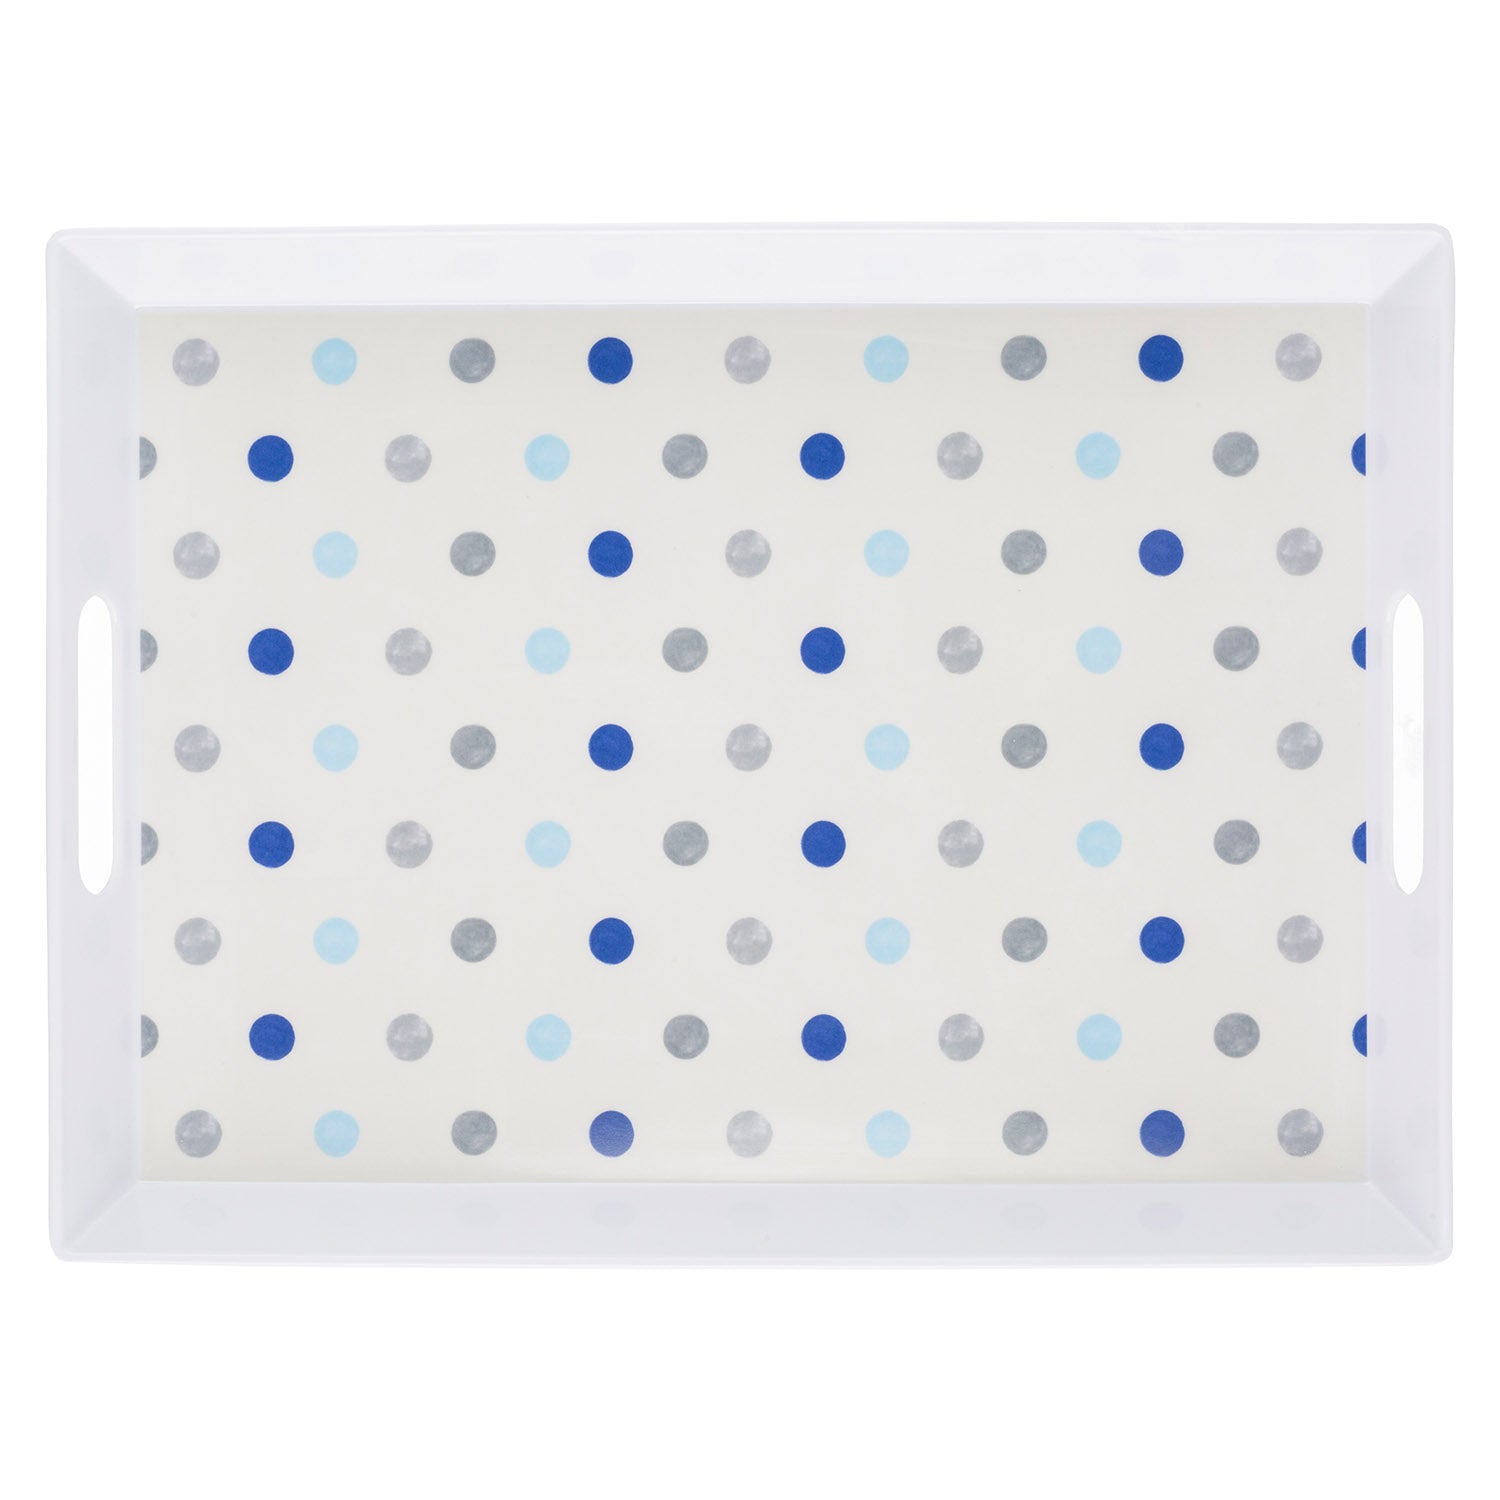 Padstow Large Plastic Blue Polka Dot Melamine Serving Tray